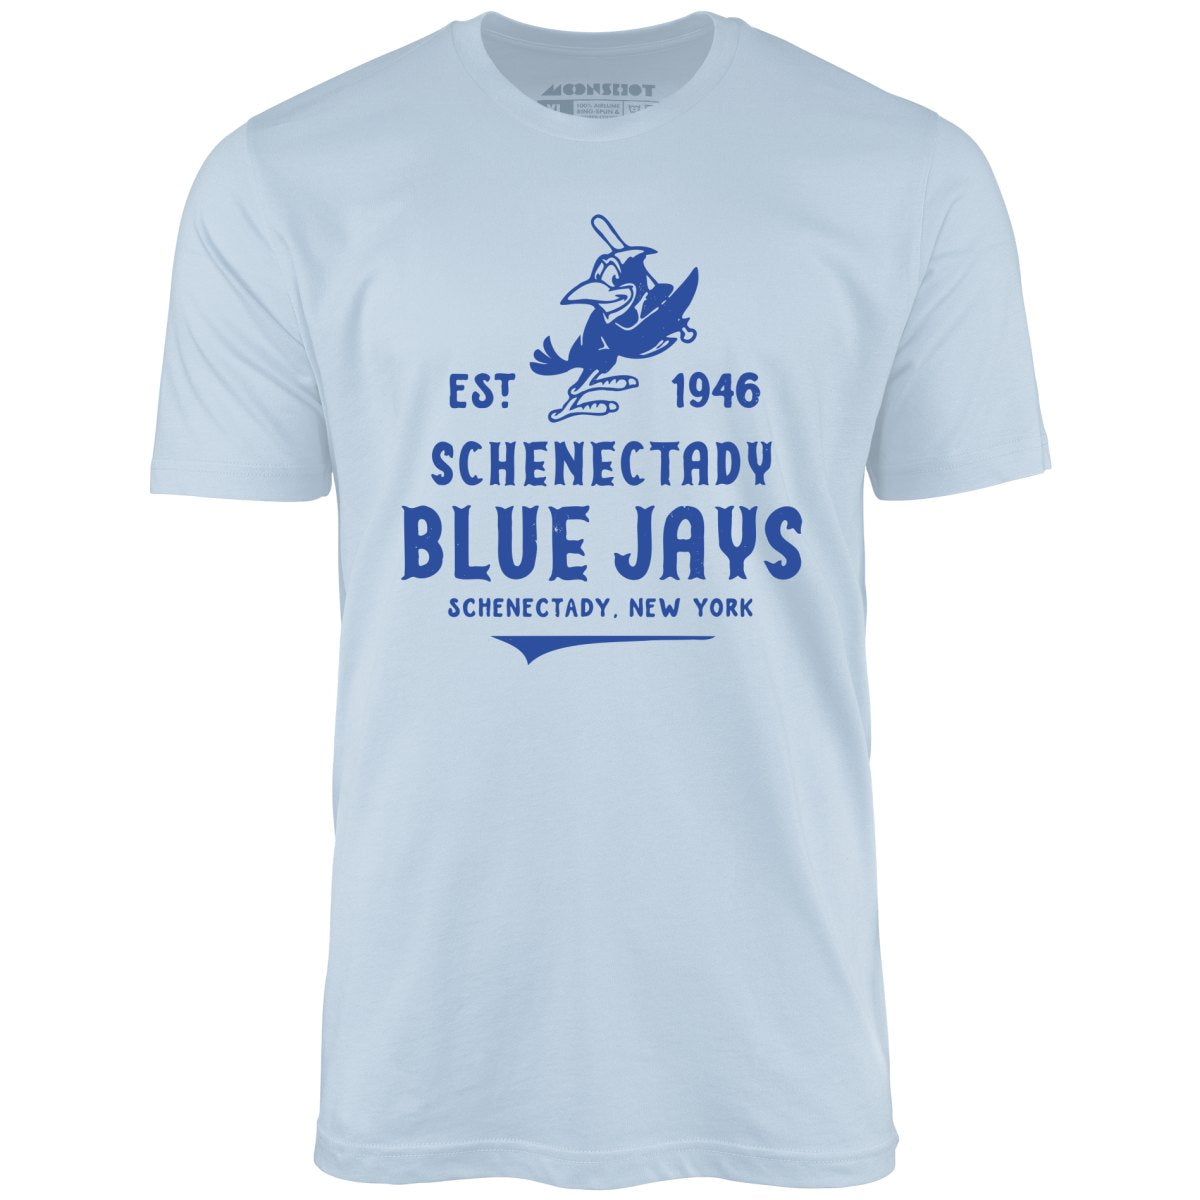 Schenectady Blue Jays - New York - Vintage Defunct Baseball Teams - Unisex T-Shirt